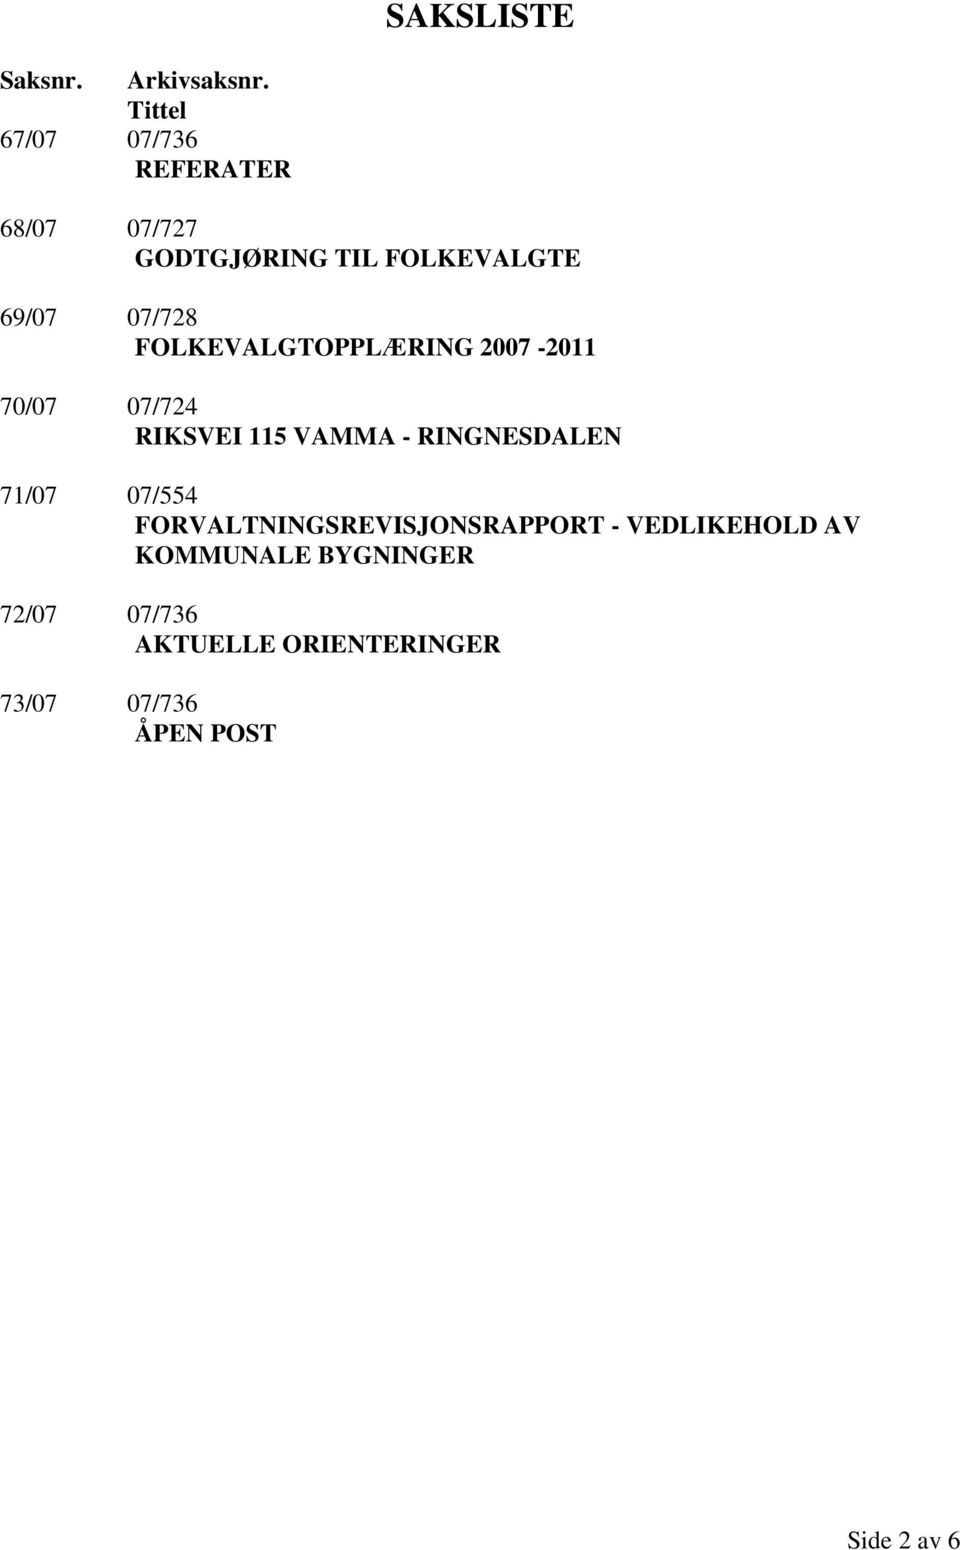 FOLKEVALGTOPPLÆRING 2007-2011 70/07 07/724 RIKSVEI 115 VAMMA - RINGNESDALEN 71/07